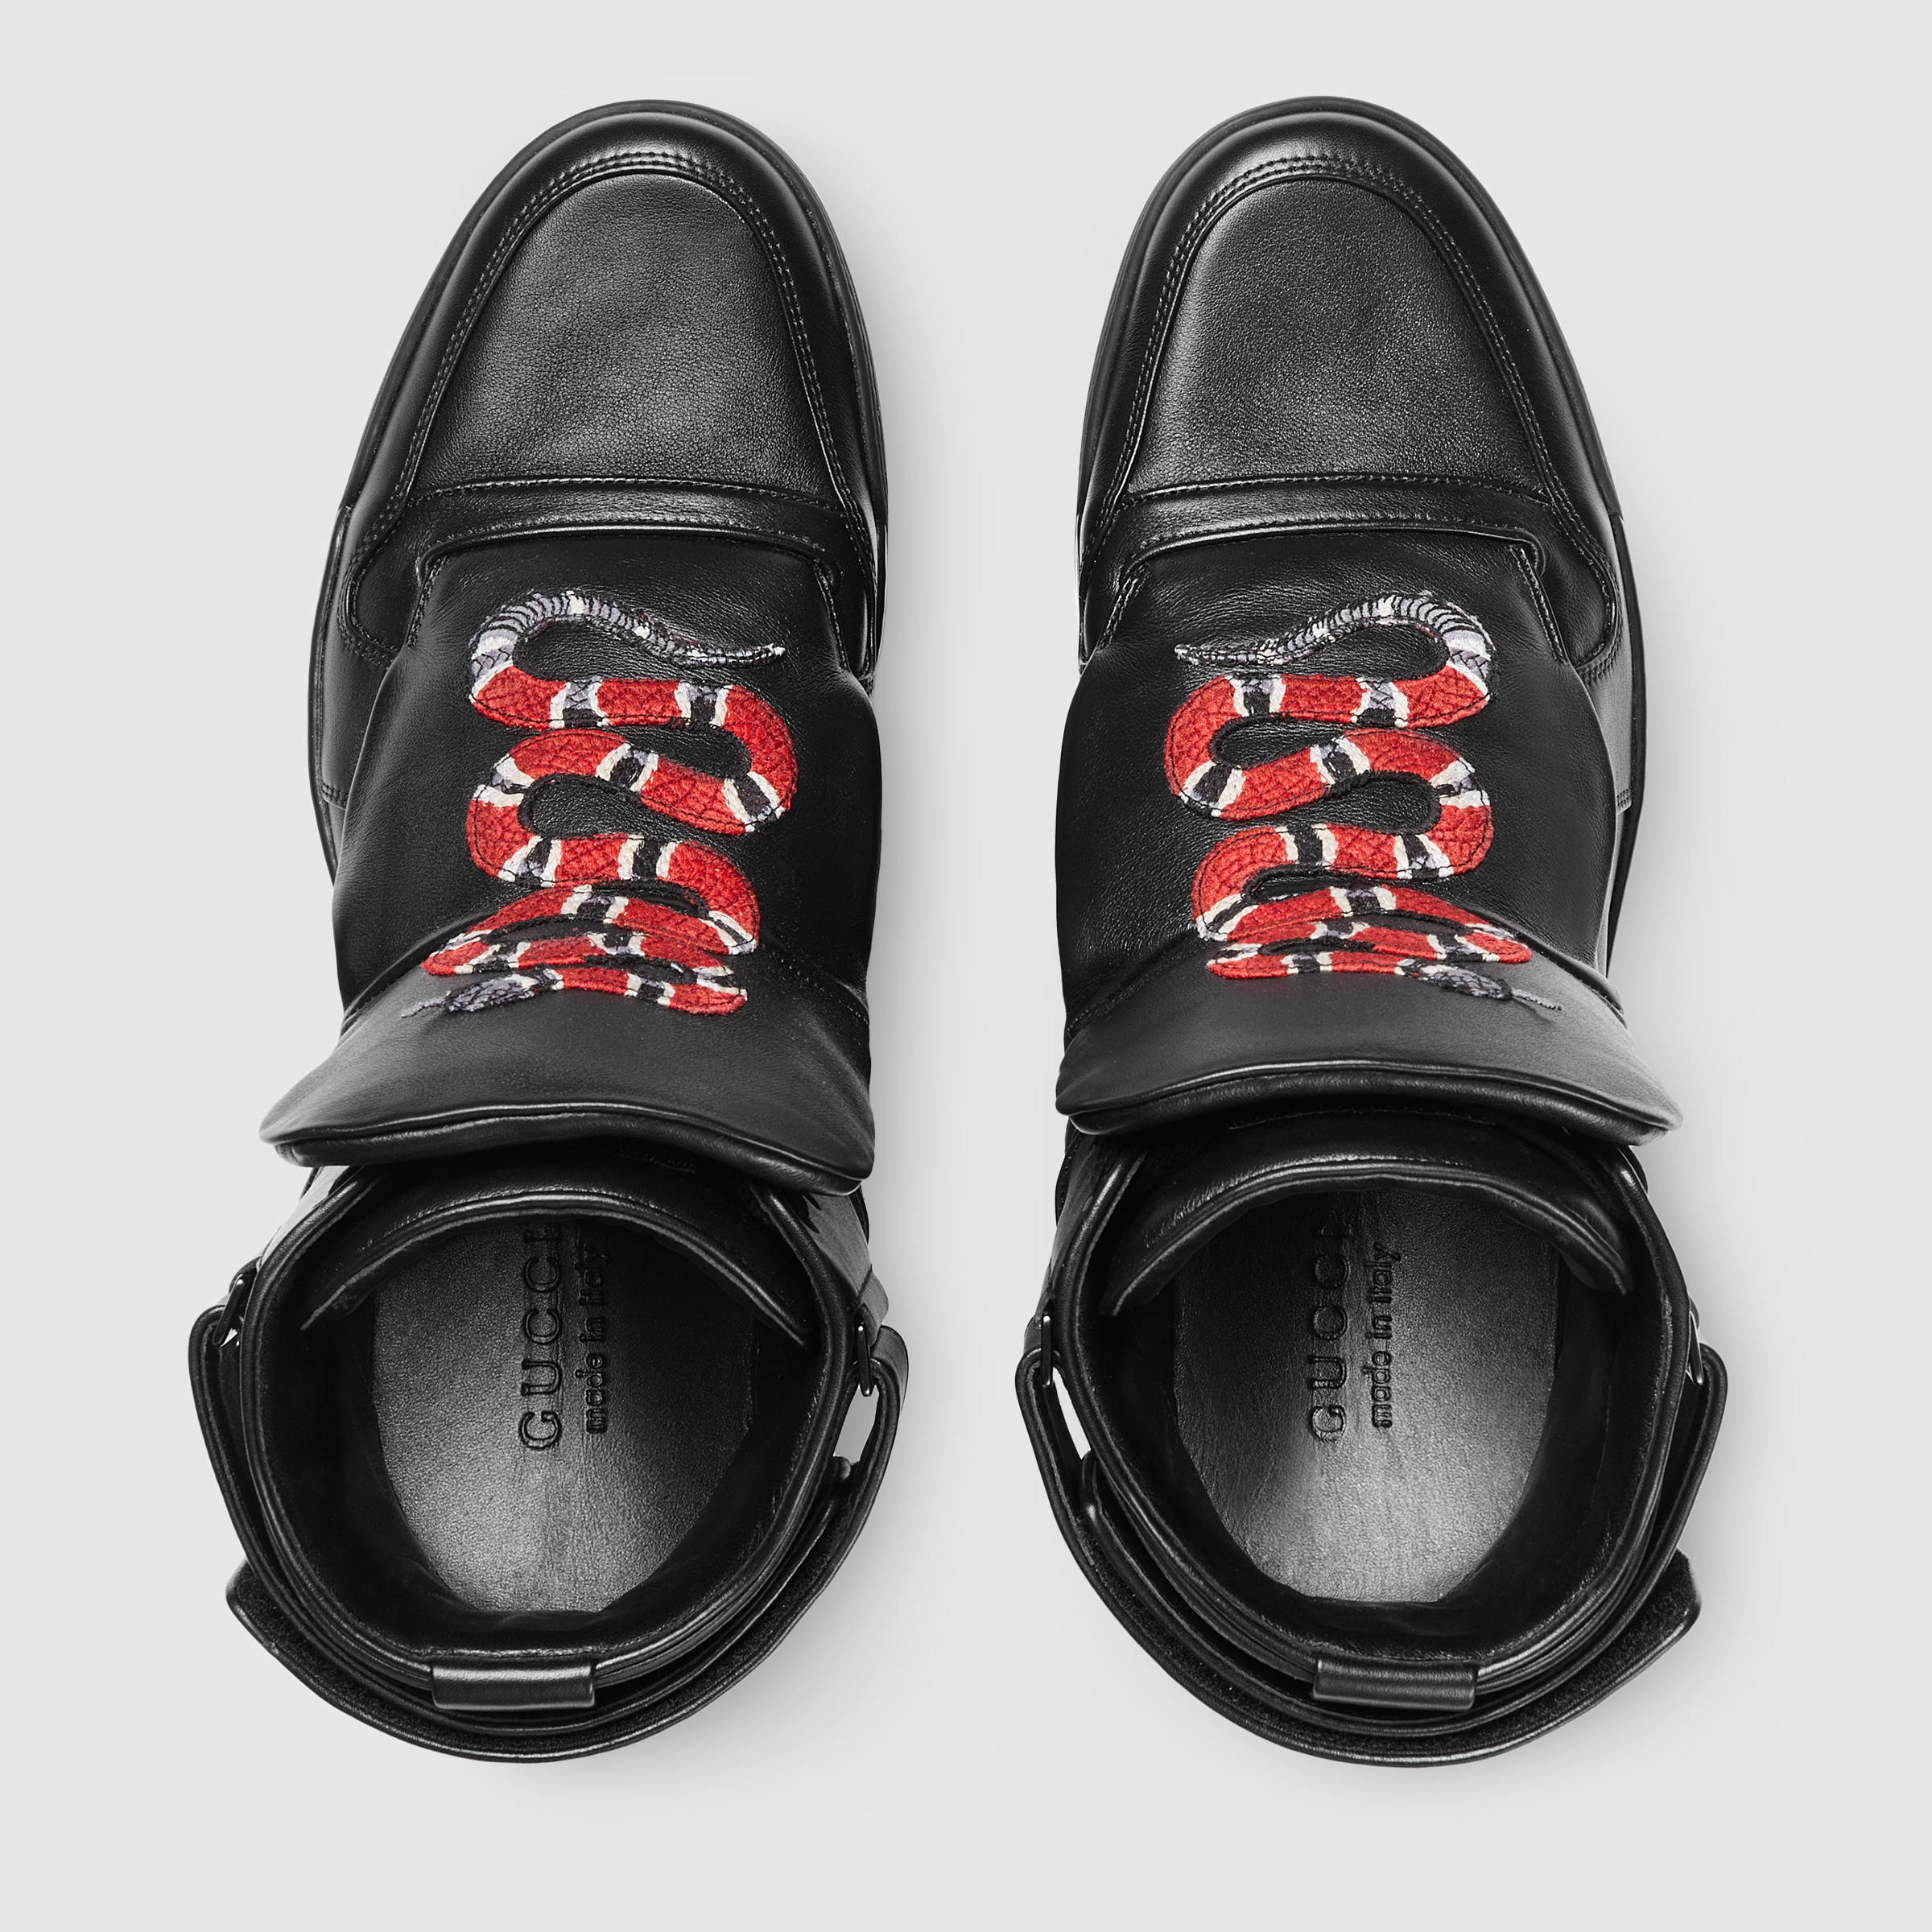 Gucci Snake Air Jordan High Top Shoes Sneakers - Tagotee